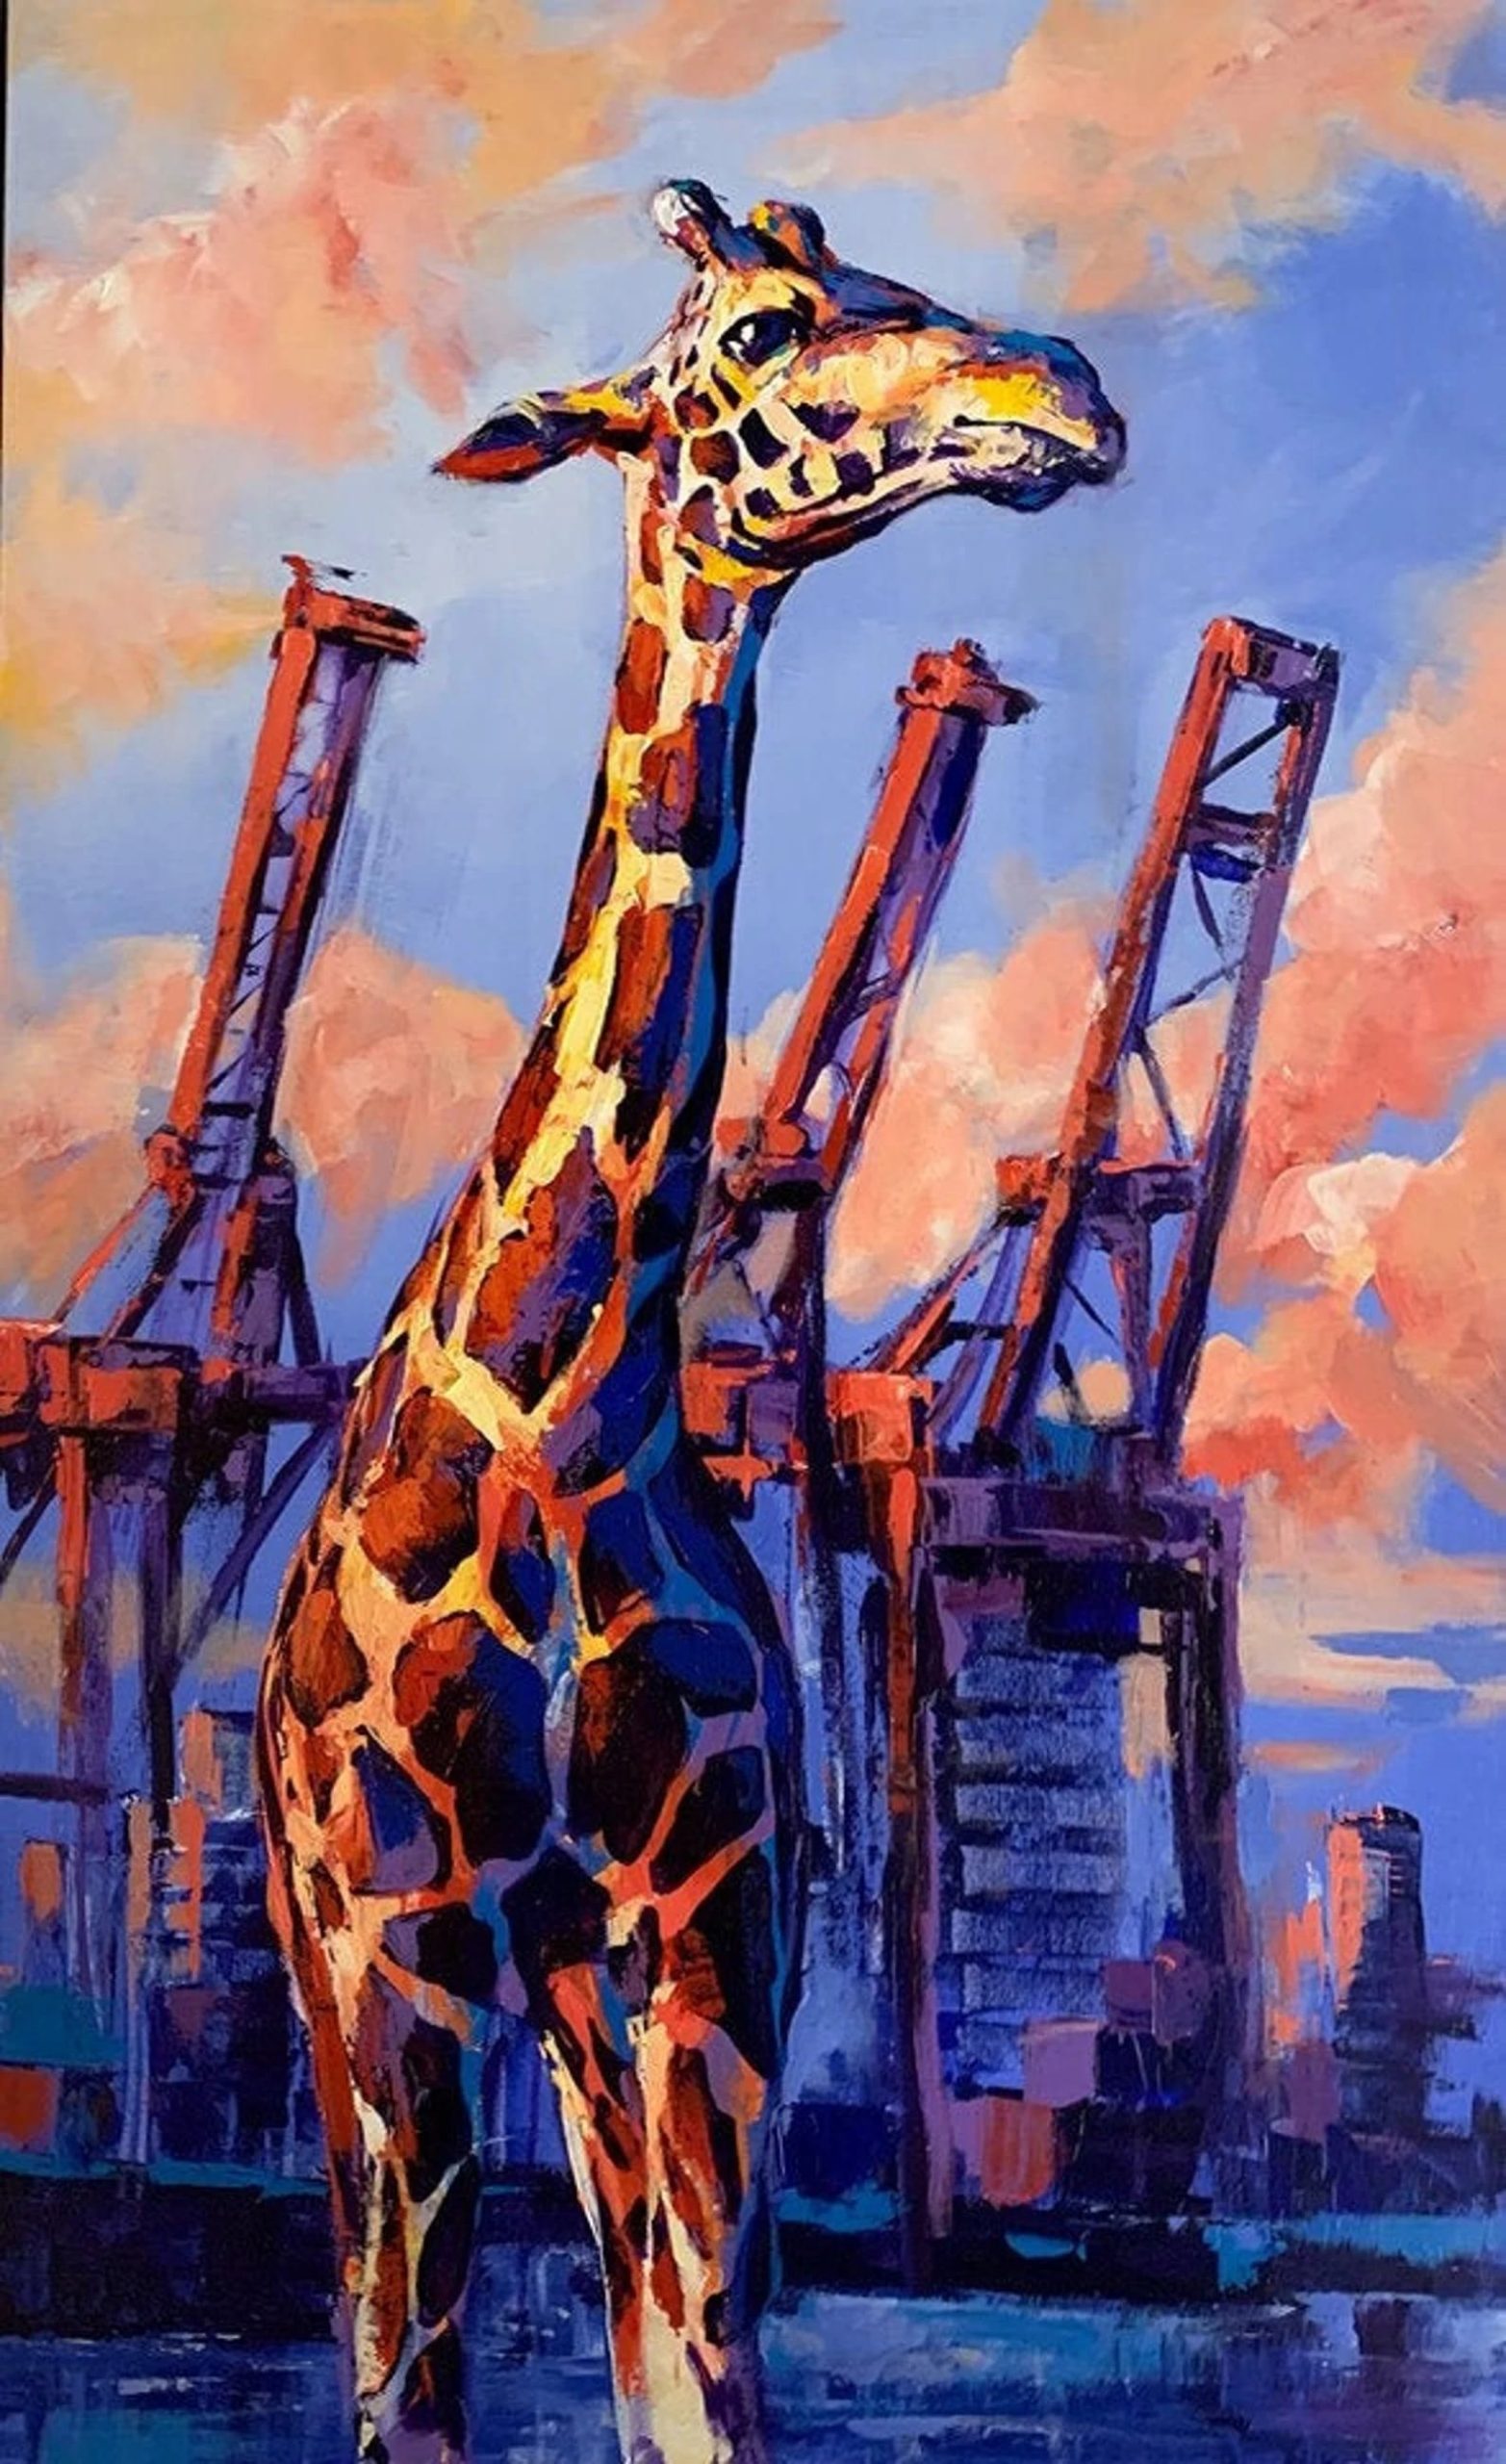 "The Herd Mentality" - Giraffe - Wildlife Concrete Jungle Artwork